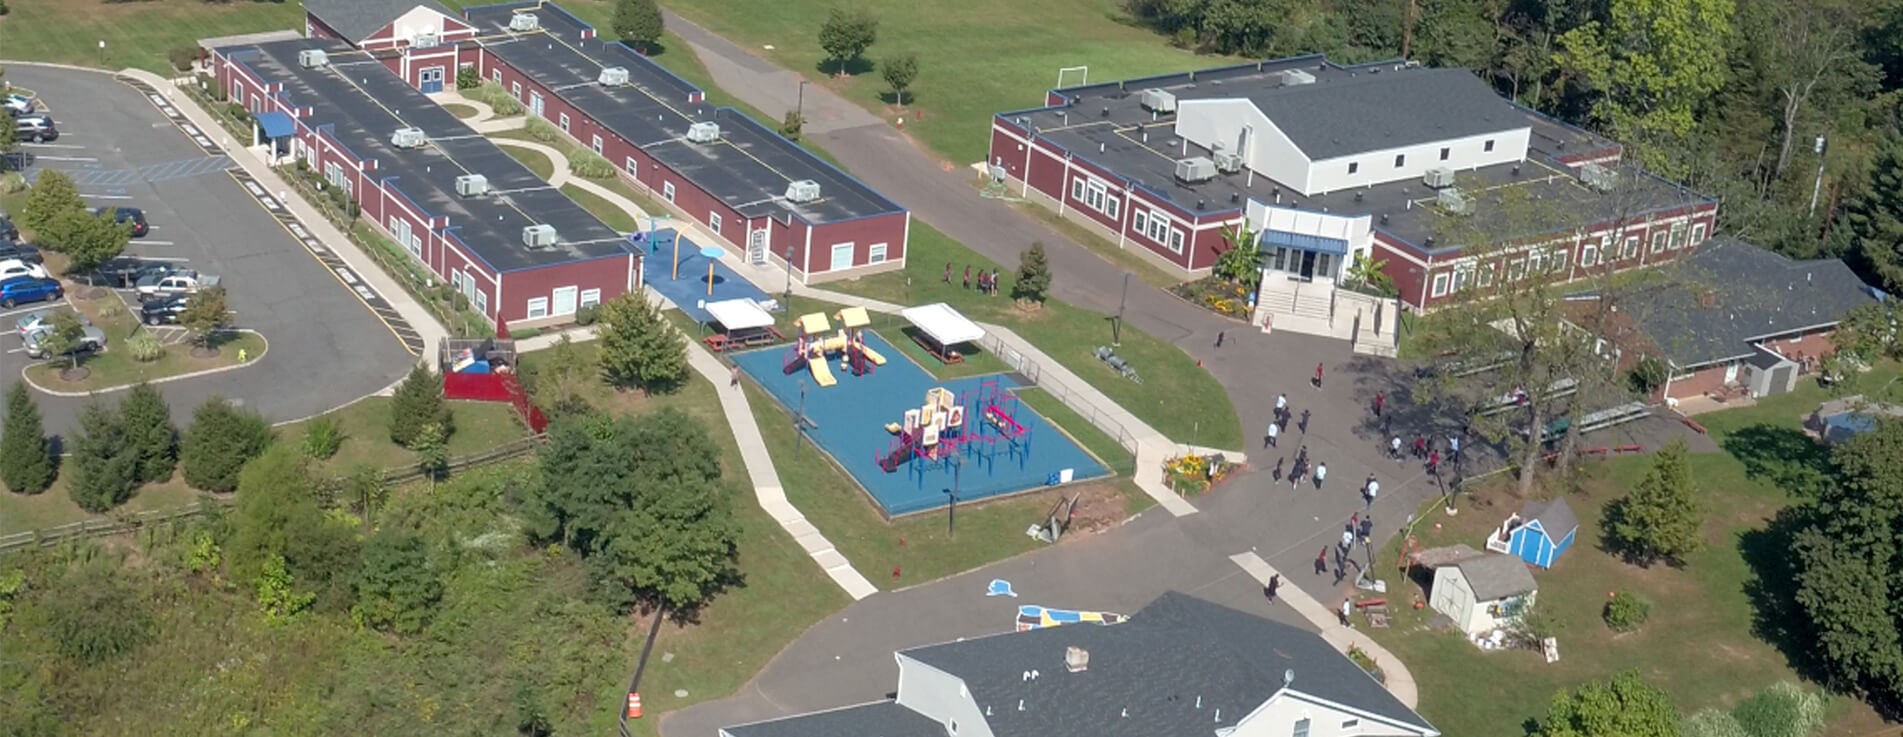 Preparatory School Near Pennsylvania | Best Private School in New Jersey